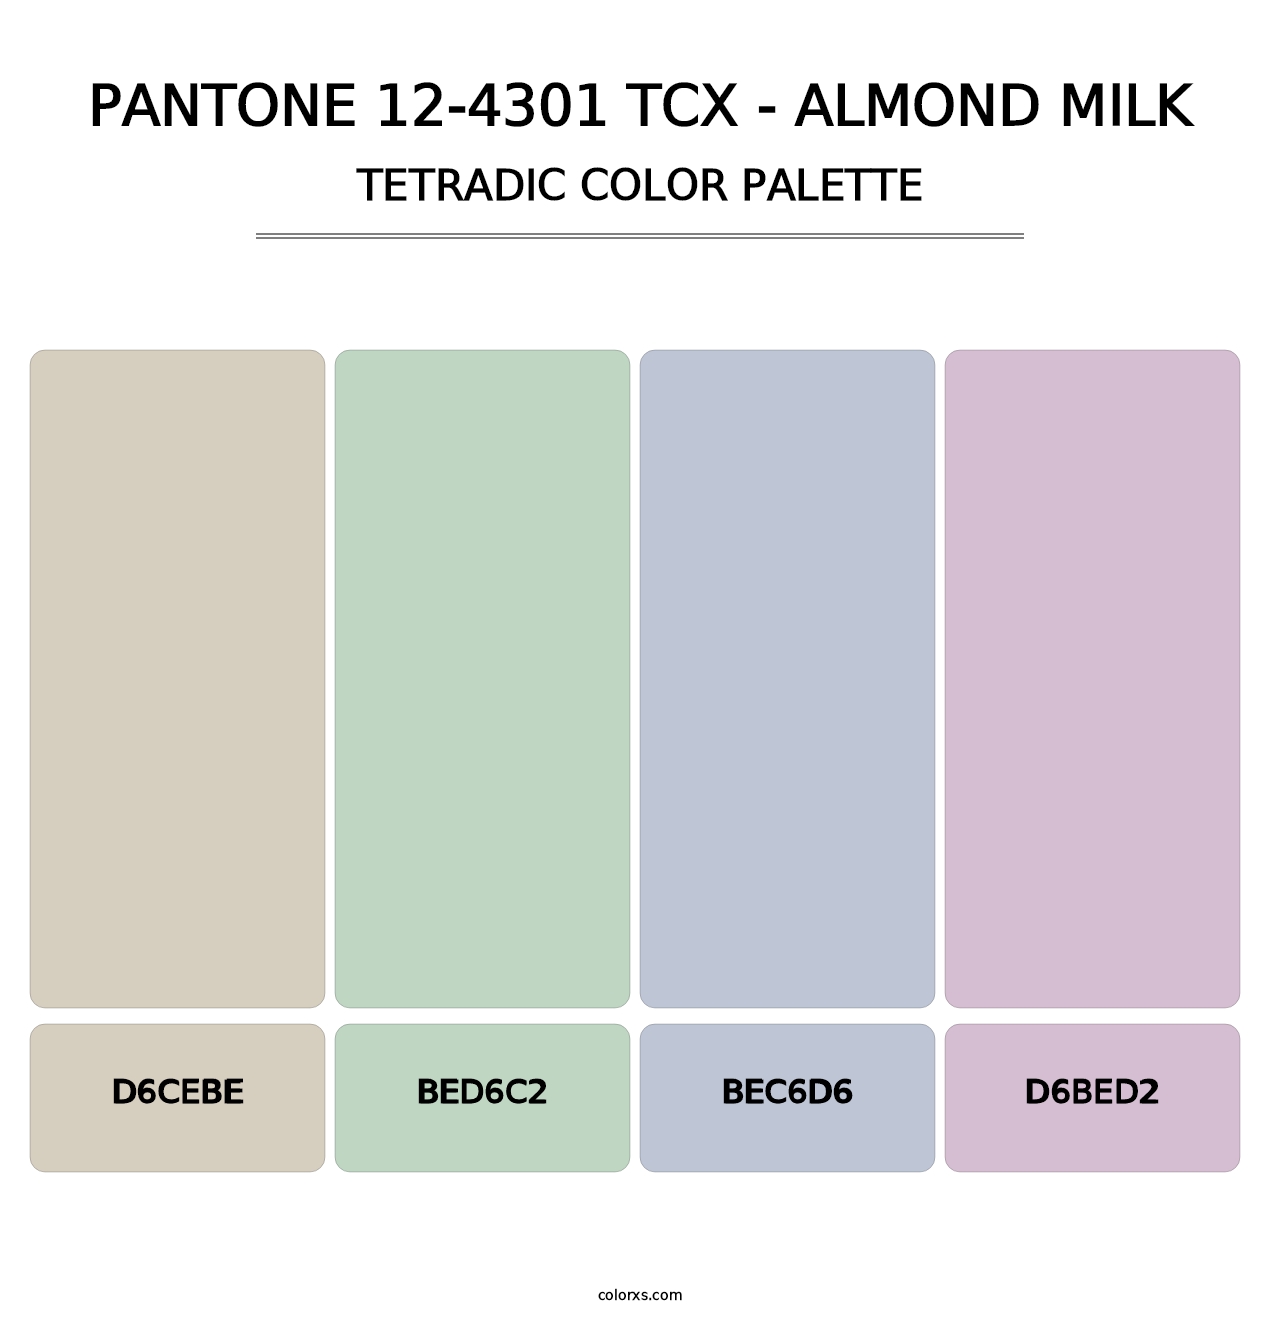 PANTONE 12-4301 TCX - Almond Milk - Tetradic Color Palette